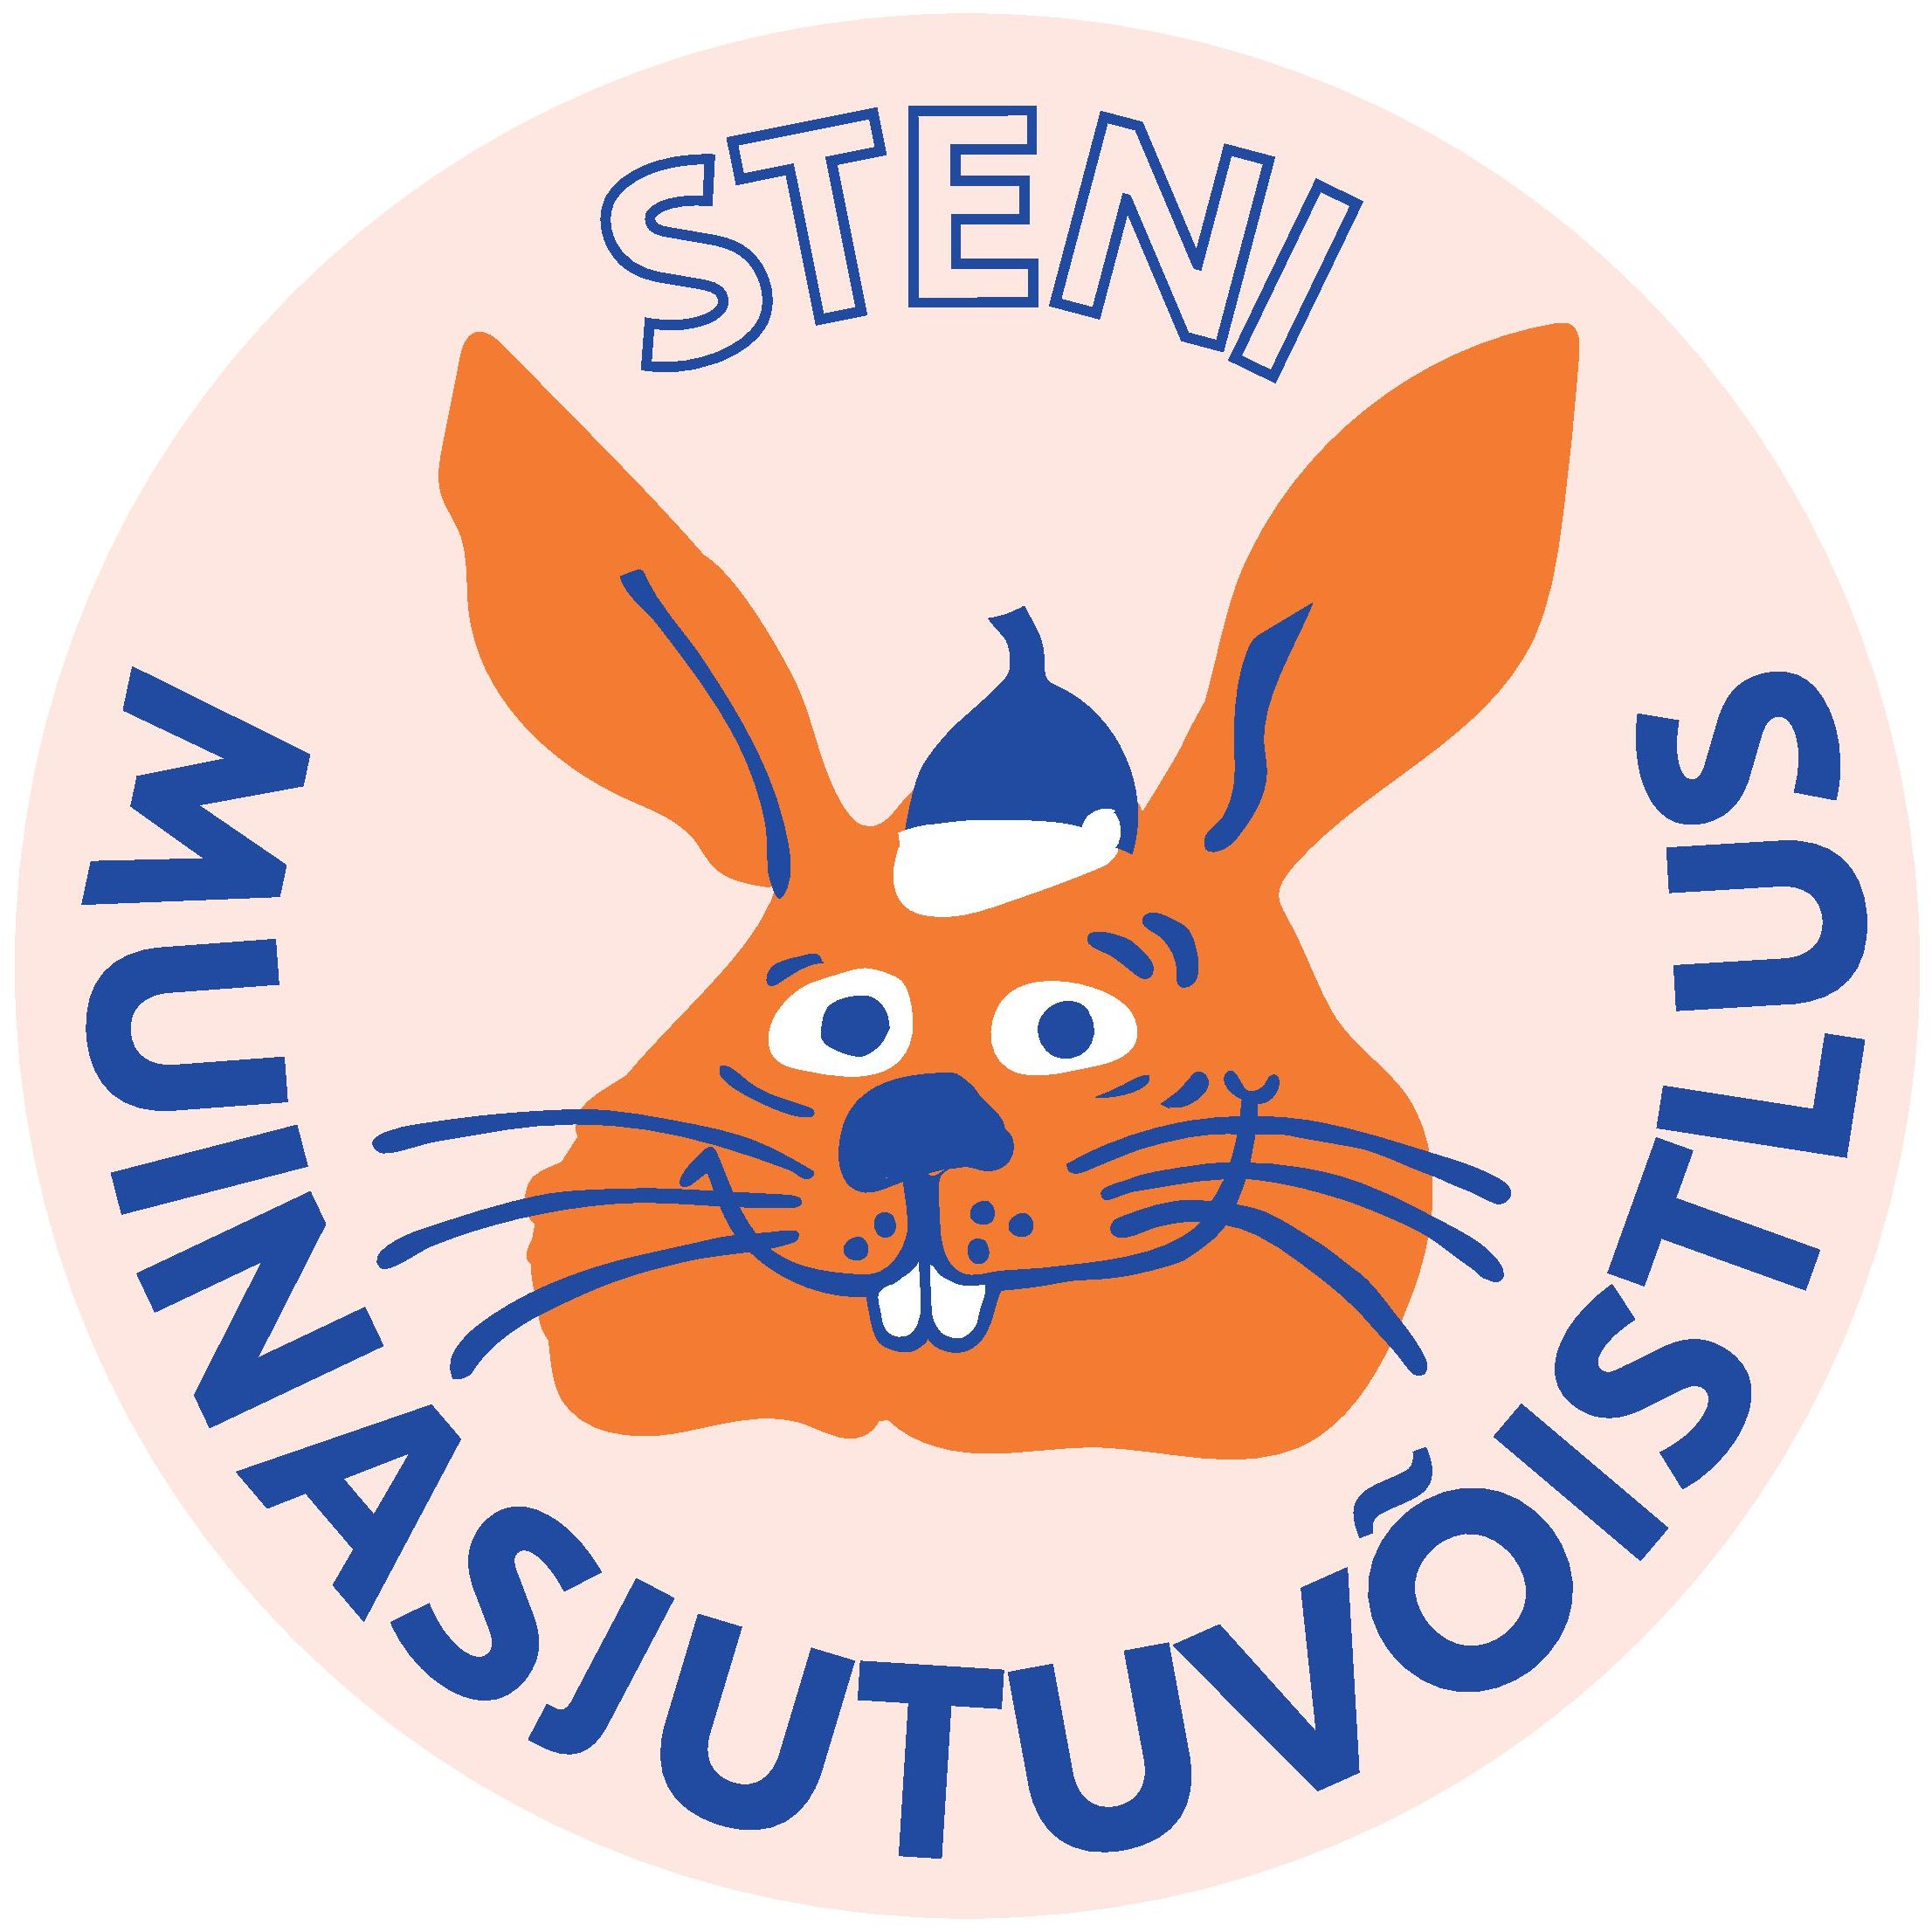 Steni-muinasjutuvostlus-logo-c.jpg